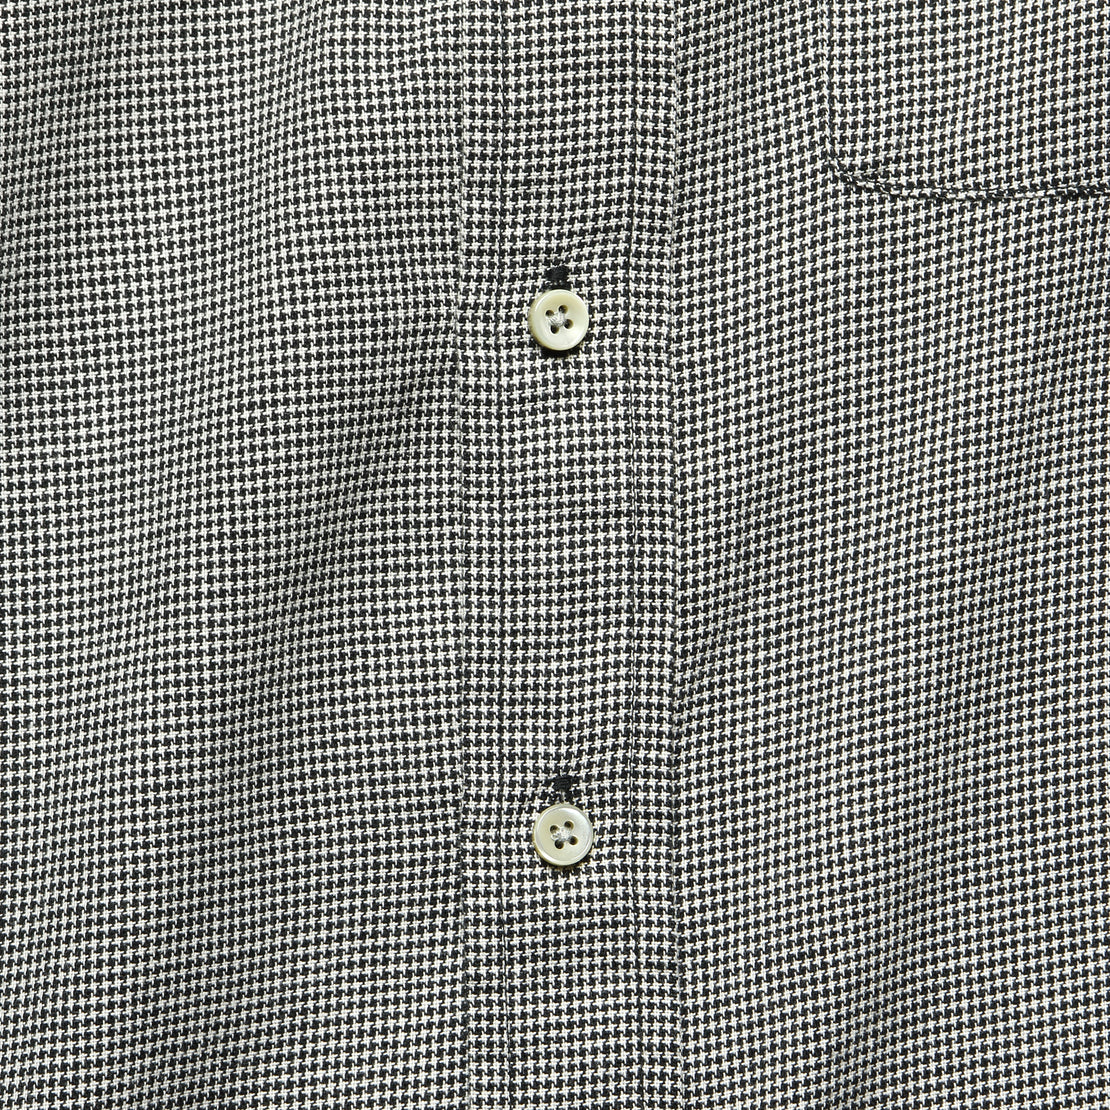 Mini Gingham Shirt - Black/White - Alex Mill - STAG Provisions - Tops - L/S Woven - Plaid